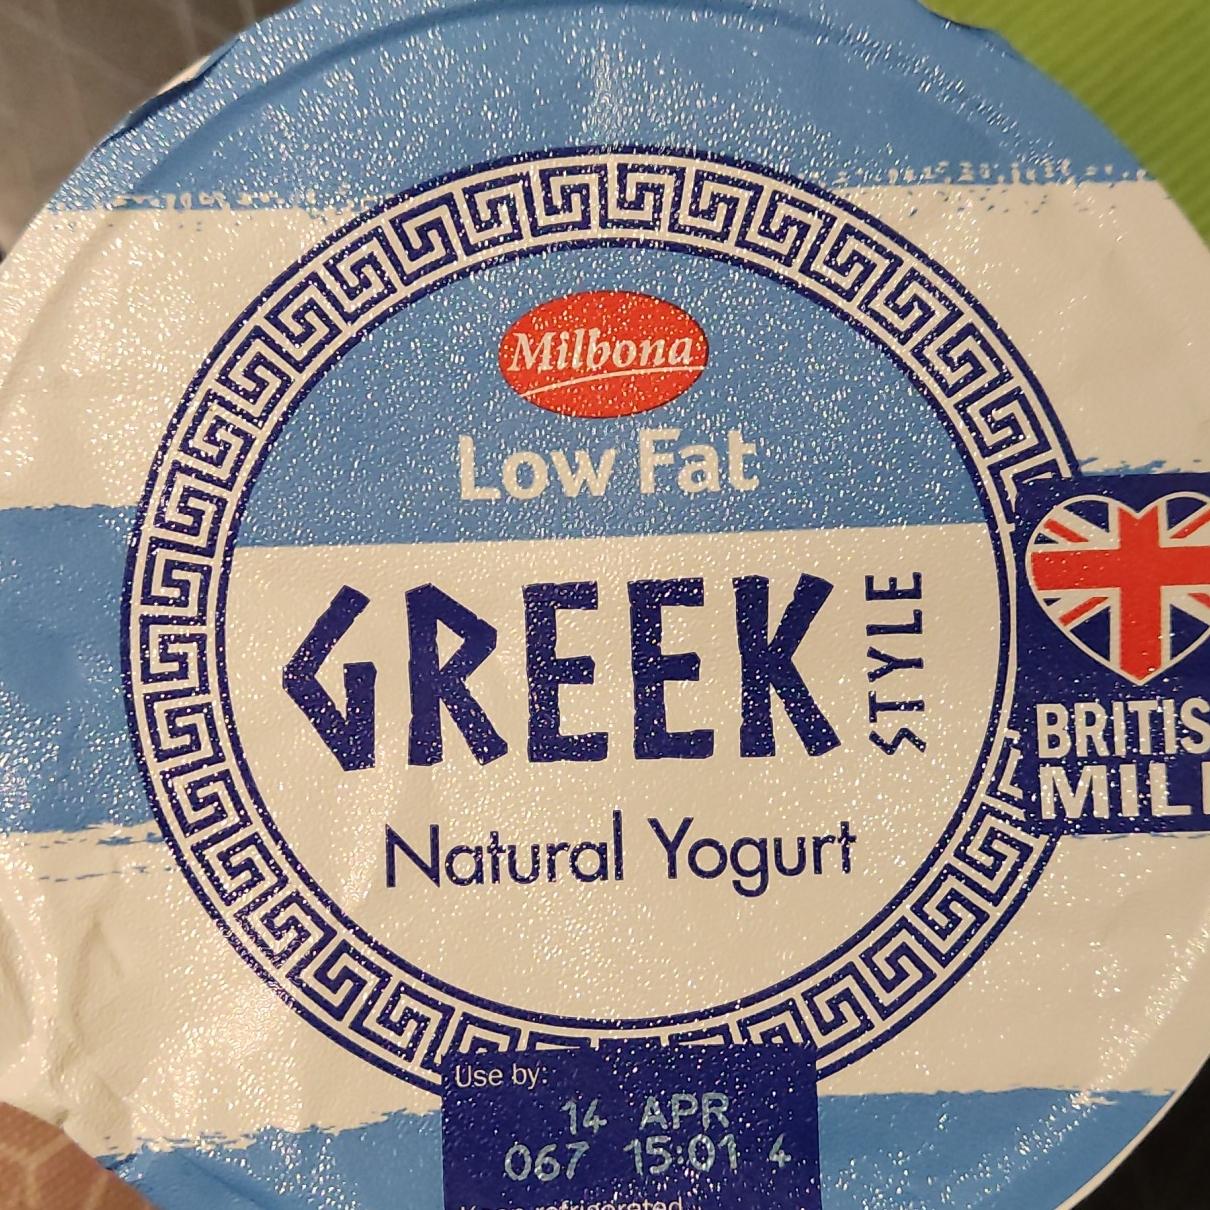 Fotografie - Low fat Greek style Natural Yogurt Milbona